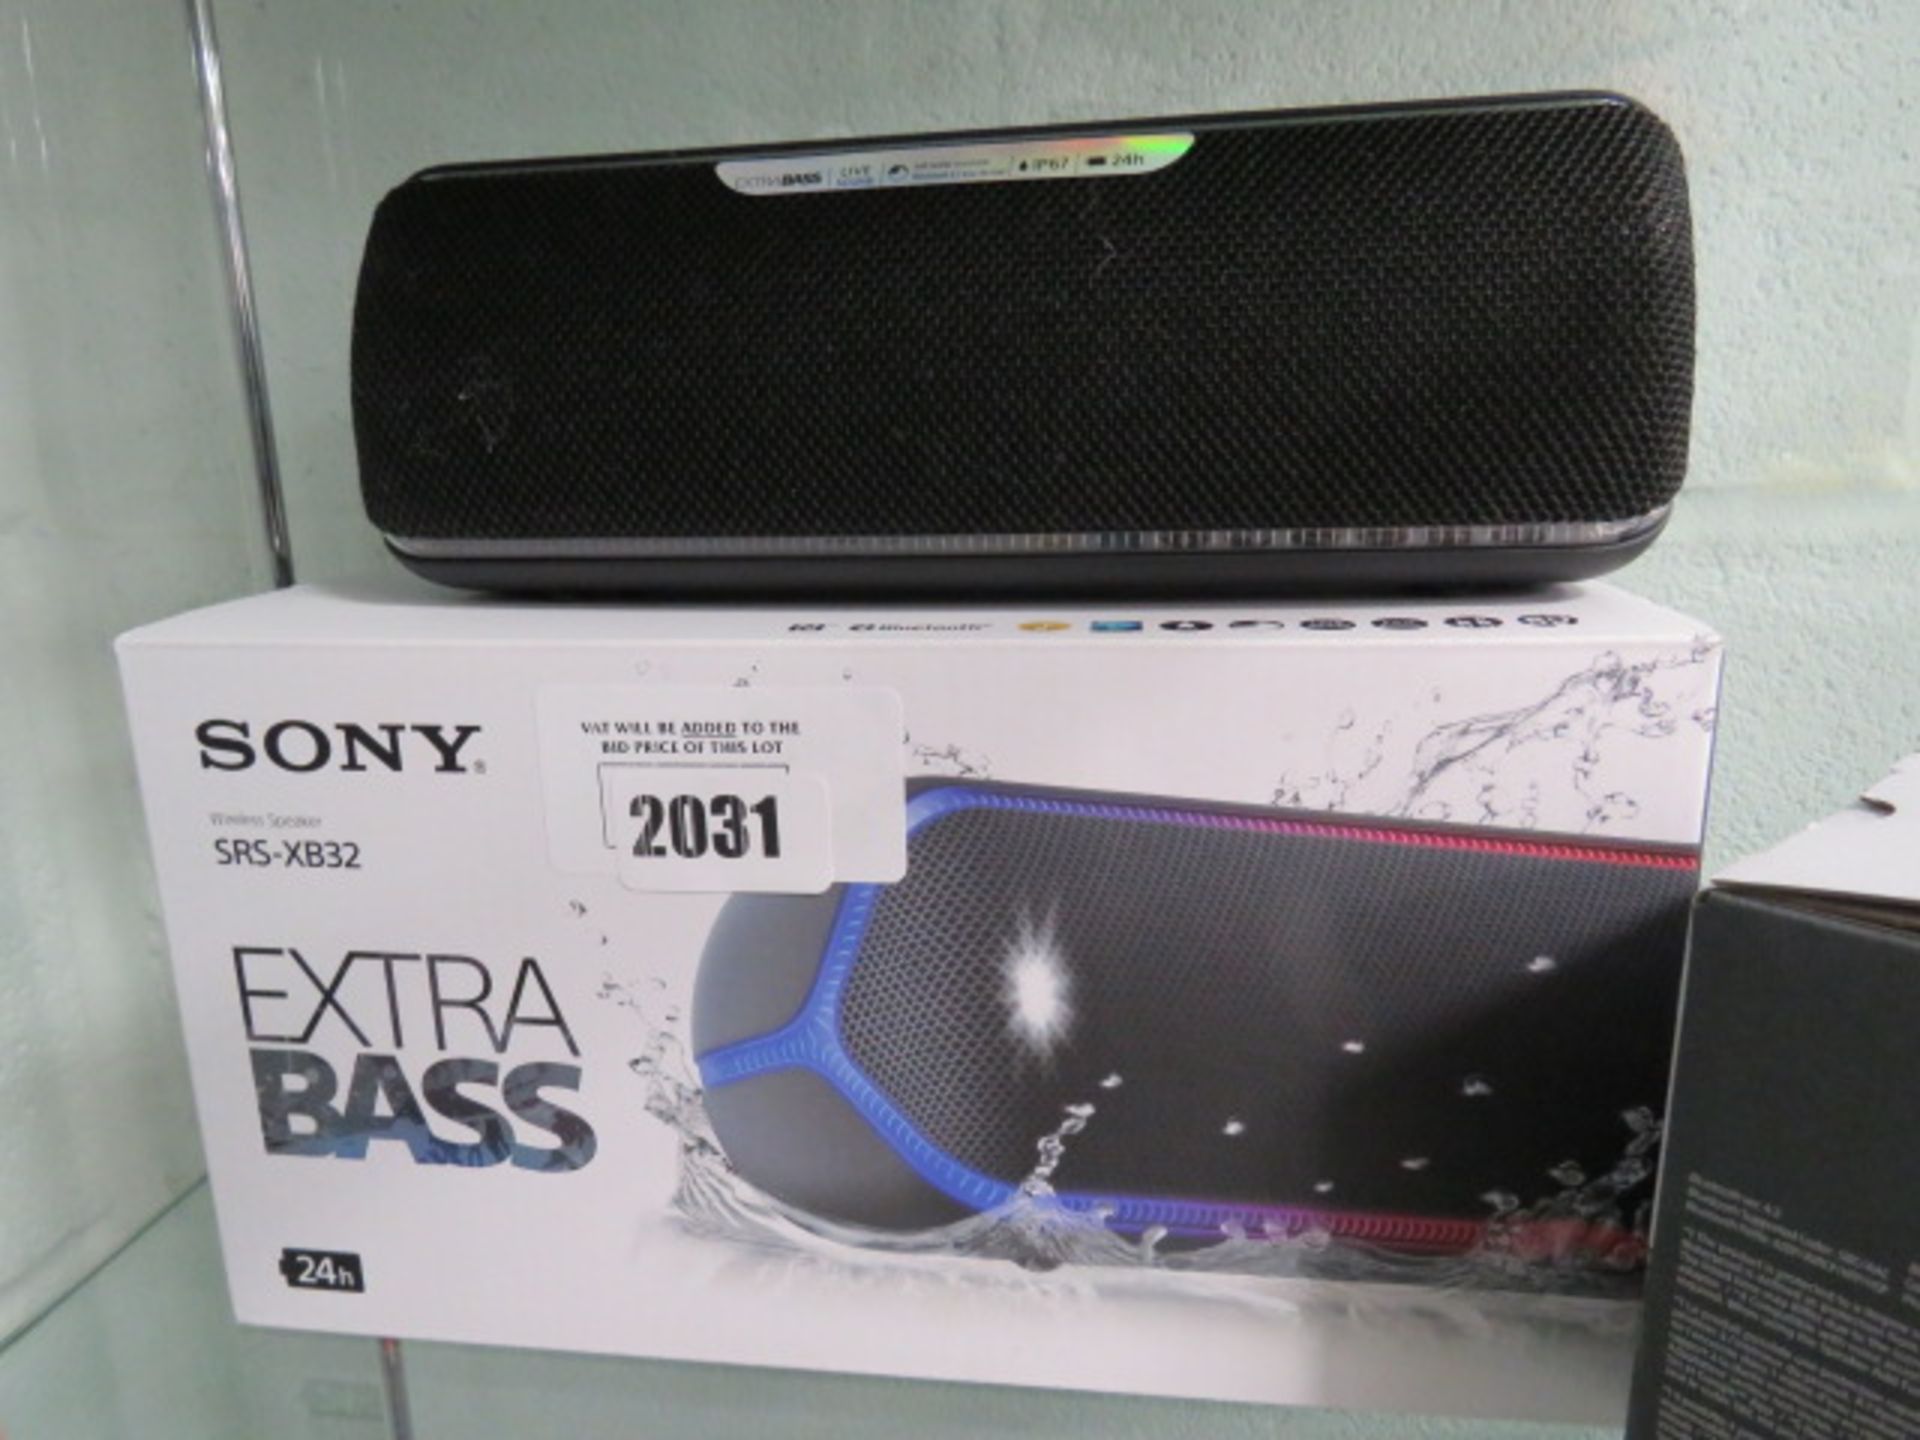 Sony SRS-XB32 bluetooth speaker with box